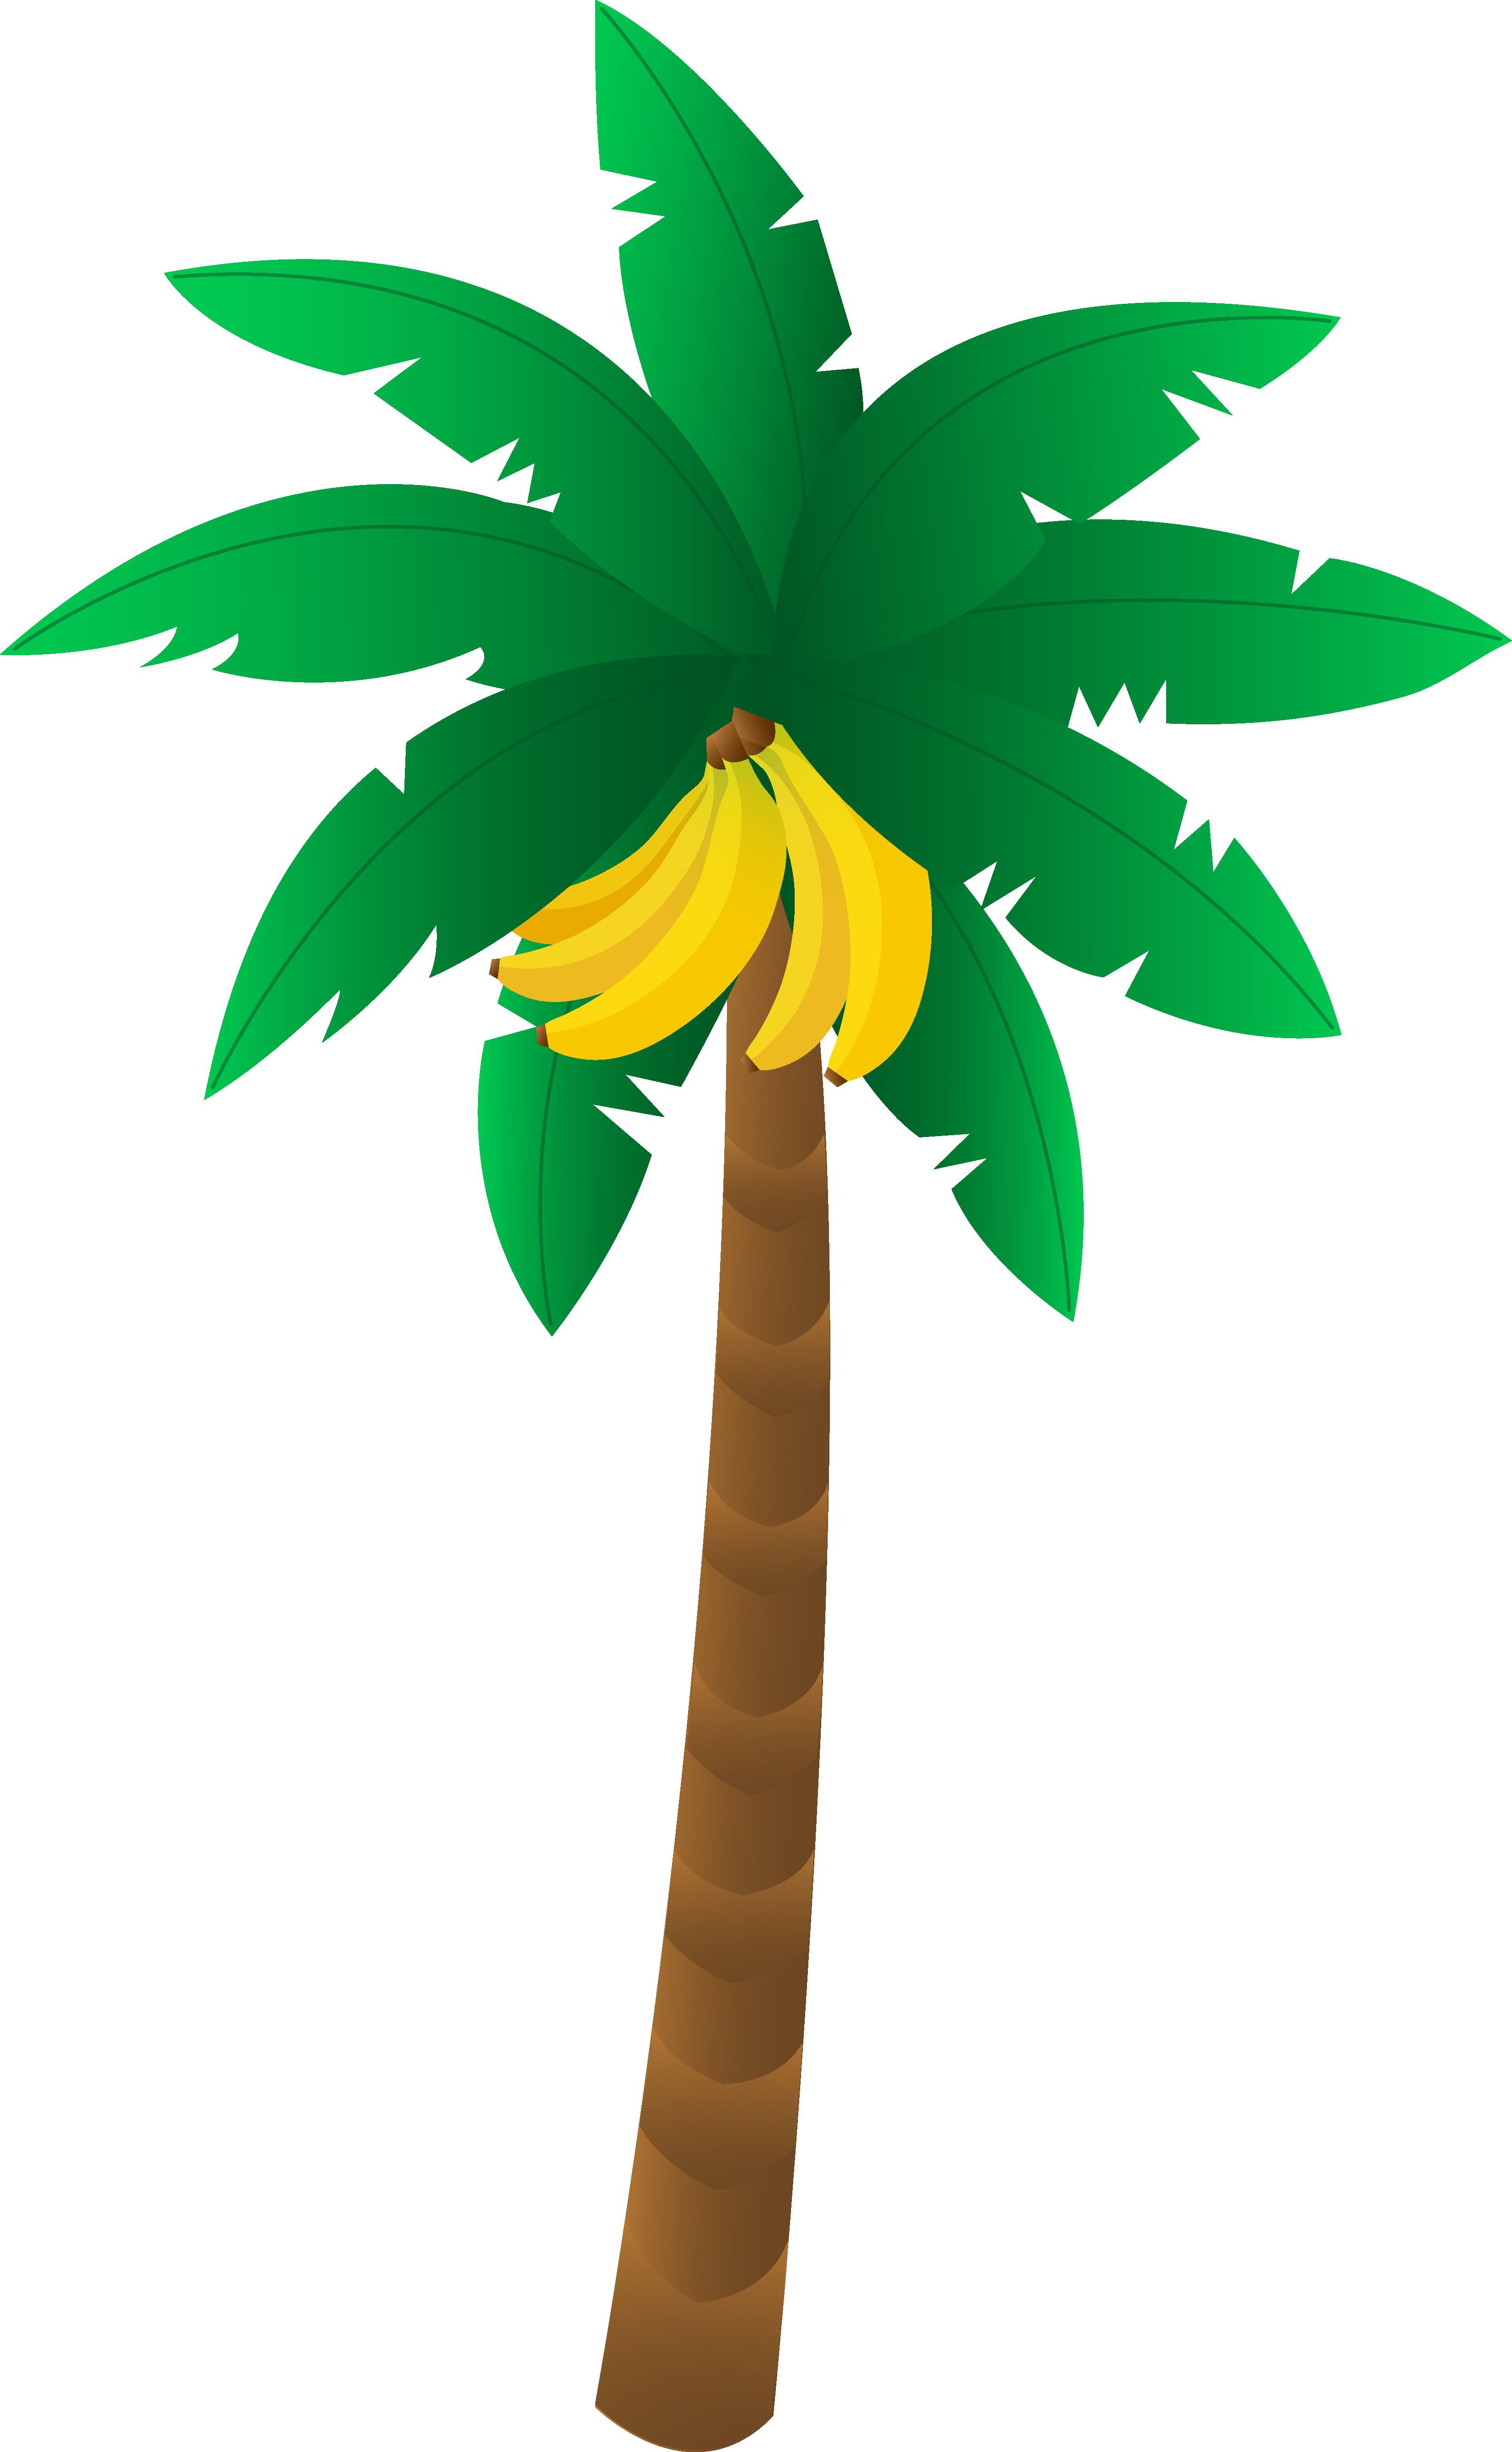 Stylized Banana Tree Illustration PNG